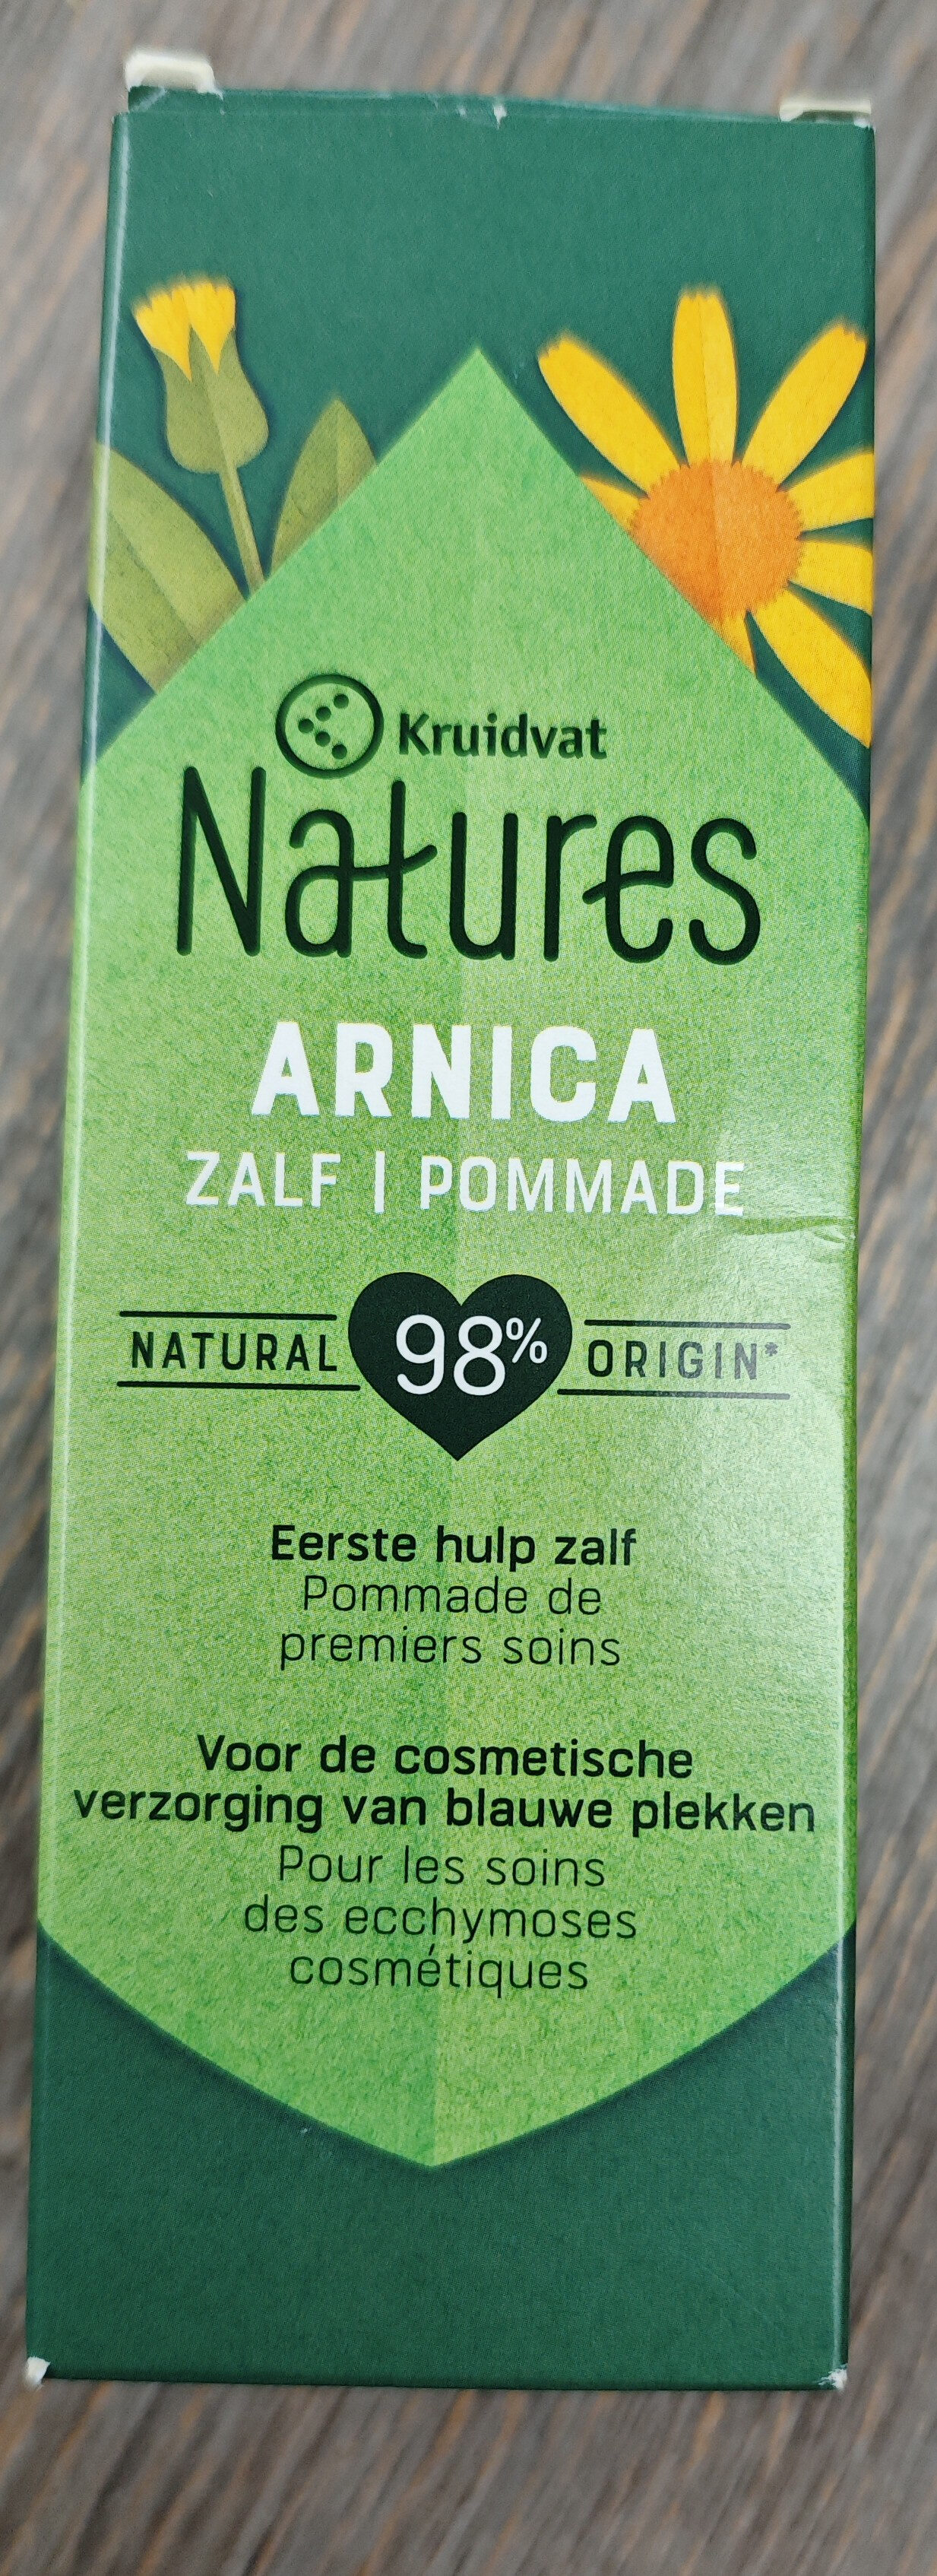 Kruidvat Natures Arnica - Produkto - fr